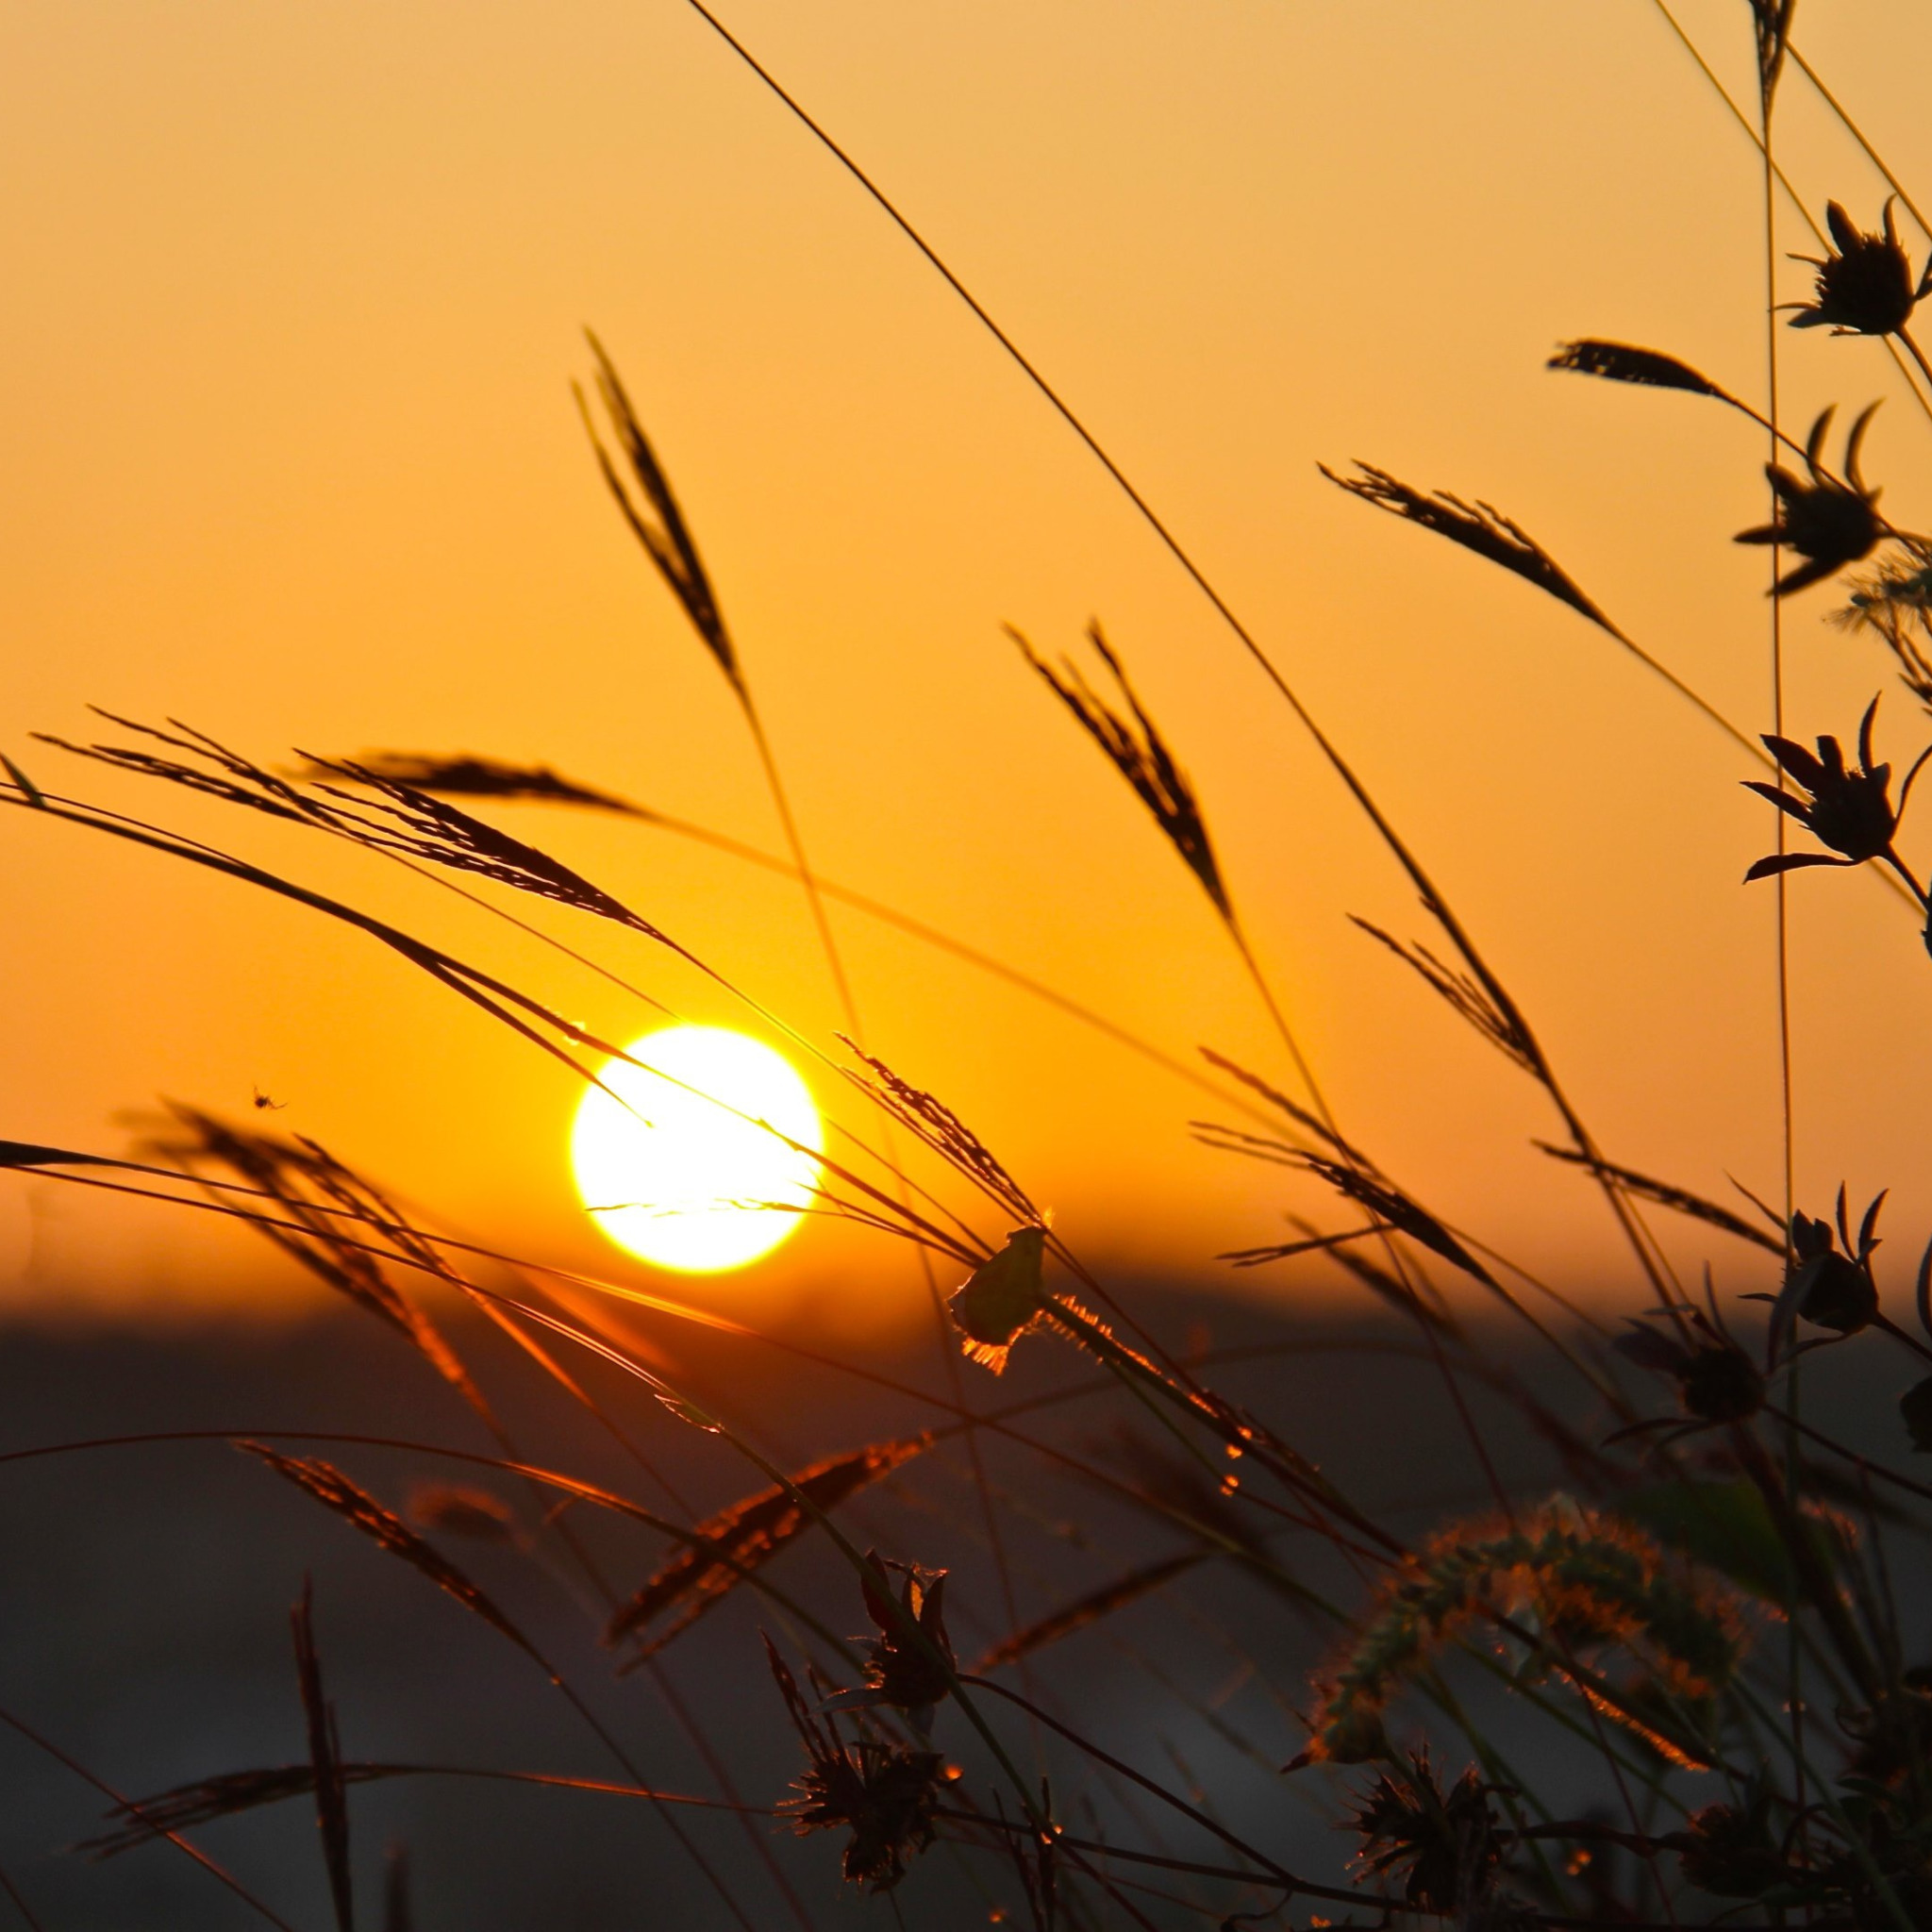 Всходит солнце над землею с каждым днем. Поле солнце. Закат солнца красивый в поле. Восход солнца в поле. Легкий закат на природе.